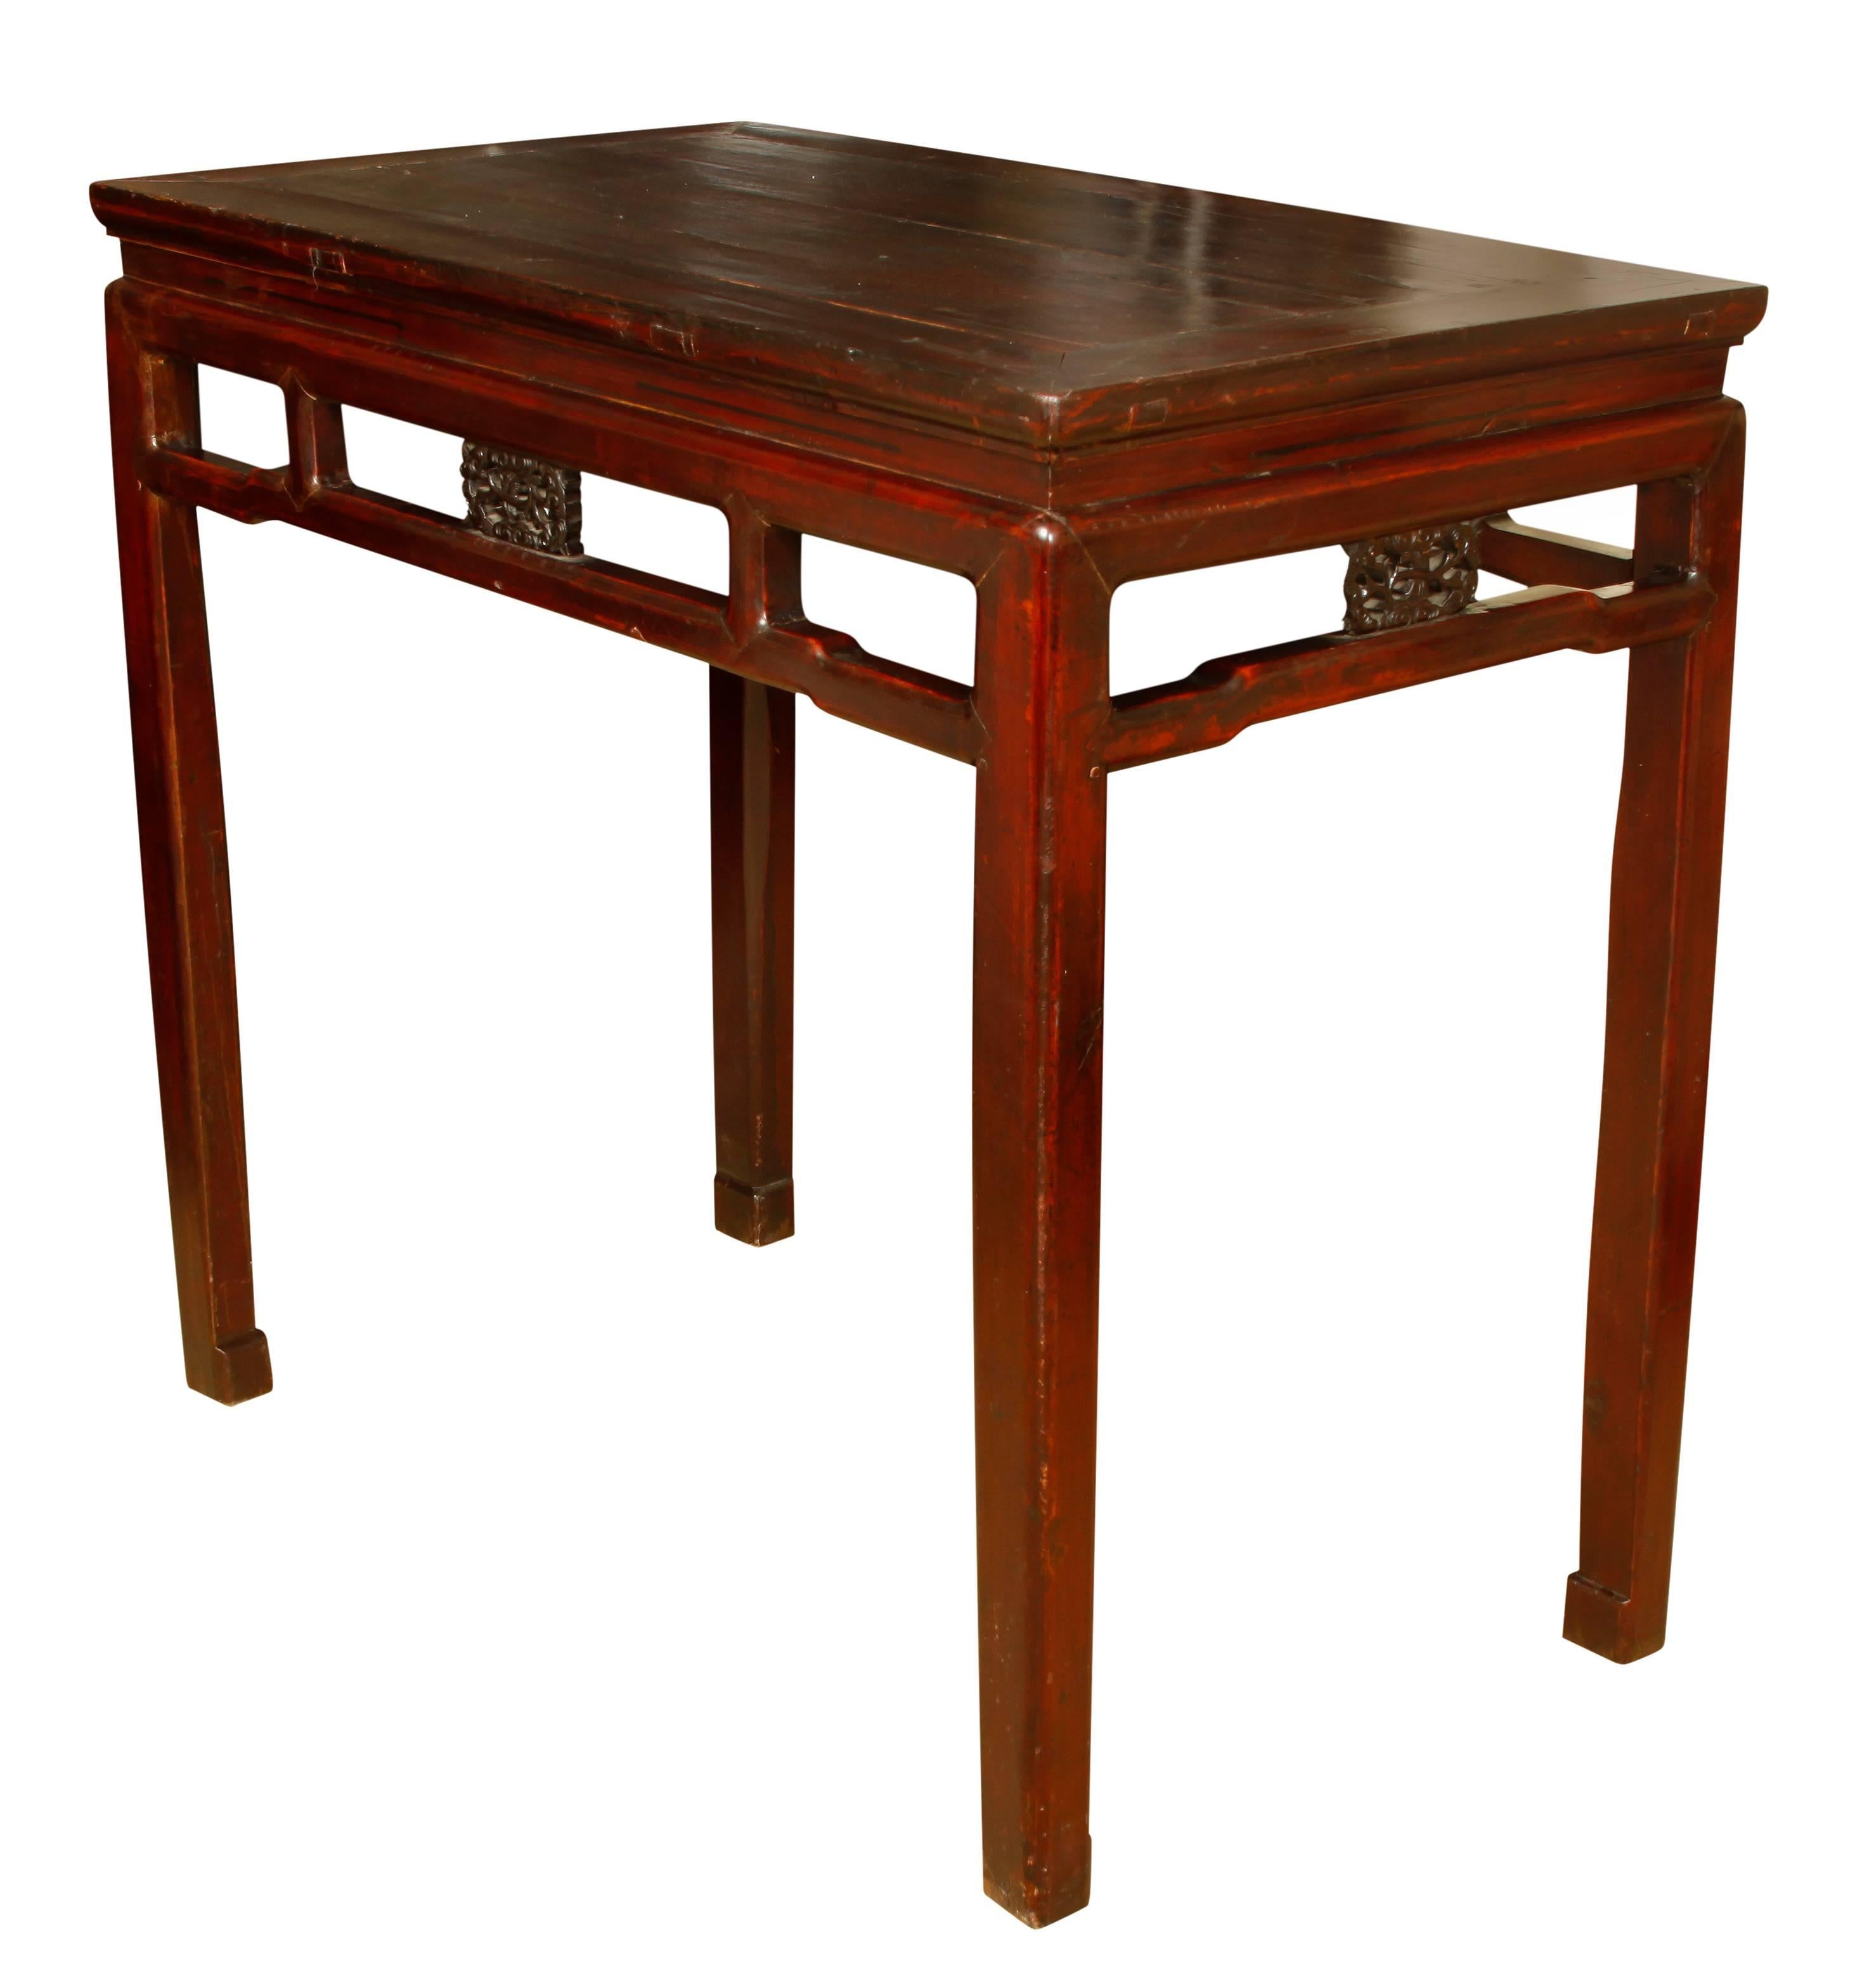 Antique Asian elmwood table.